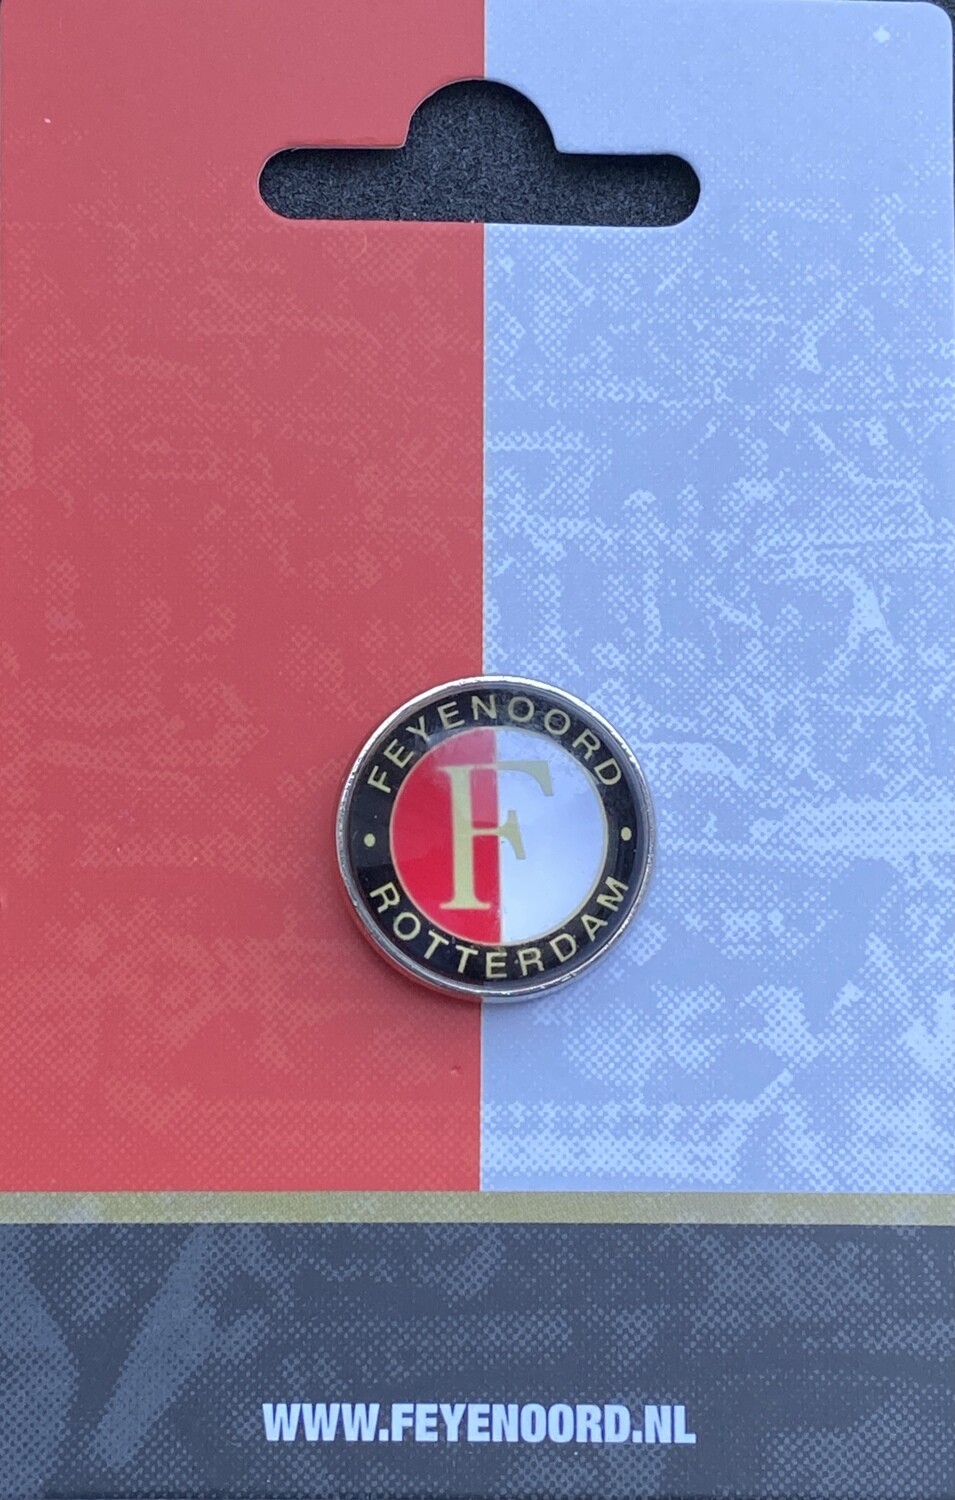 Opel Feyenoord Rotterdam Pin Badge 